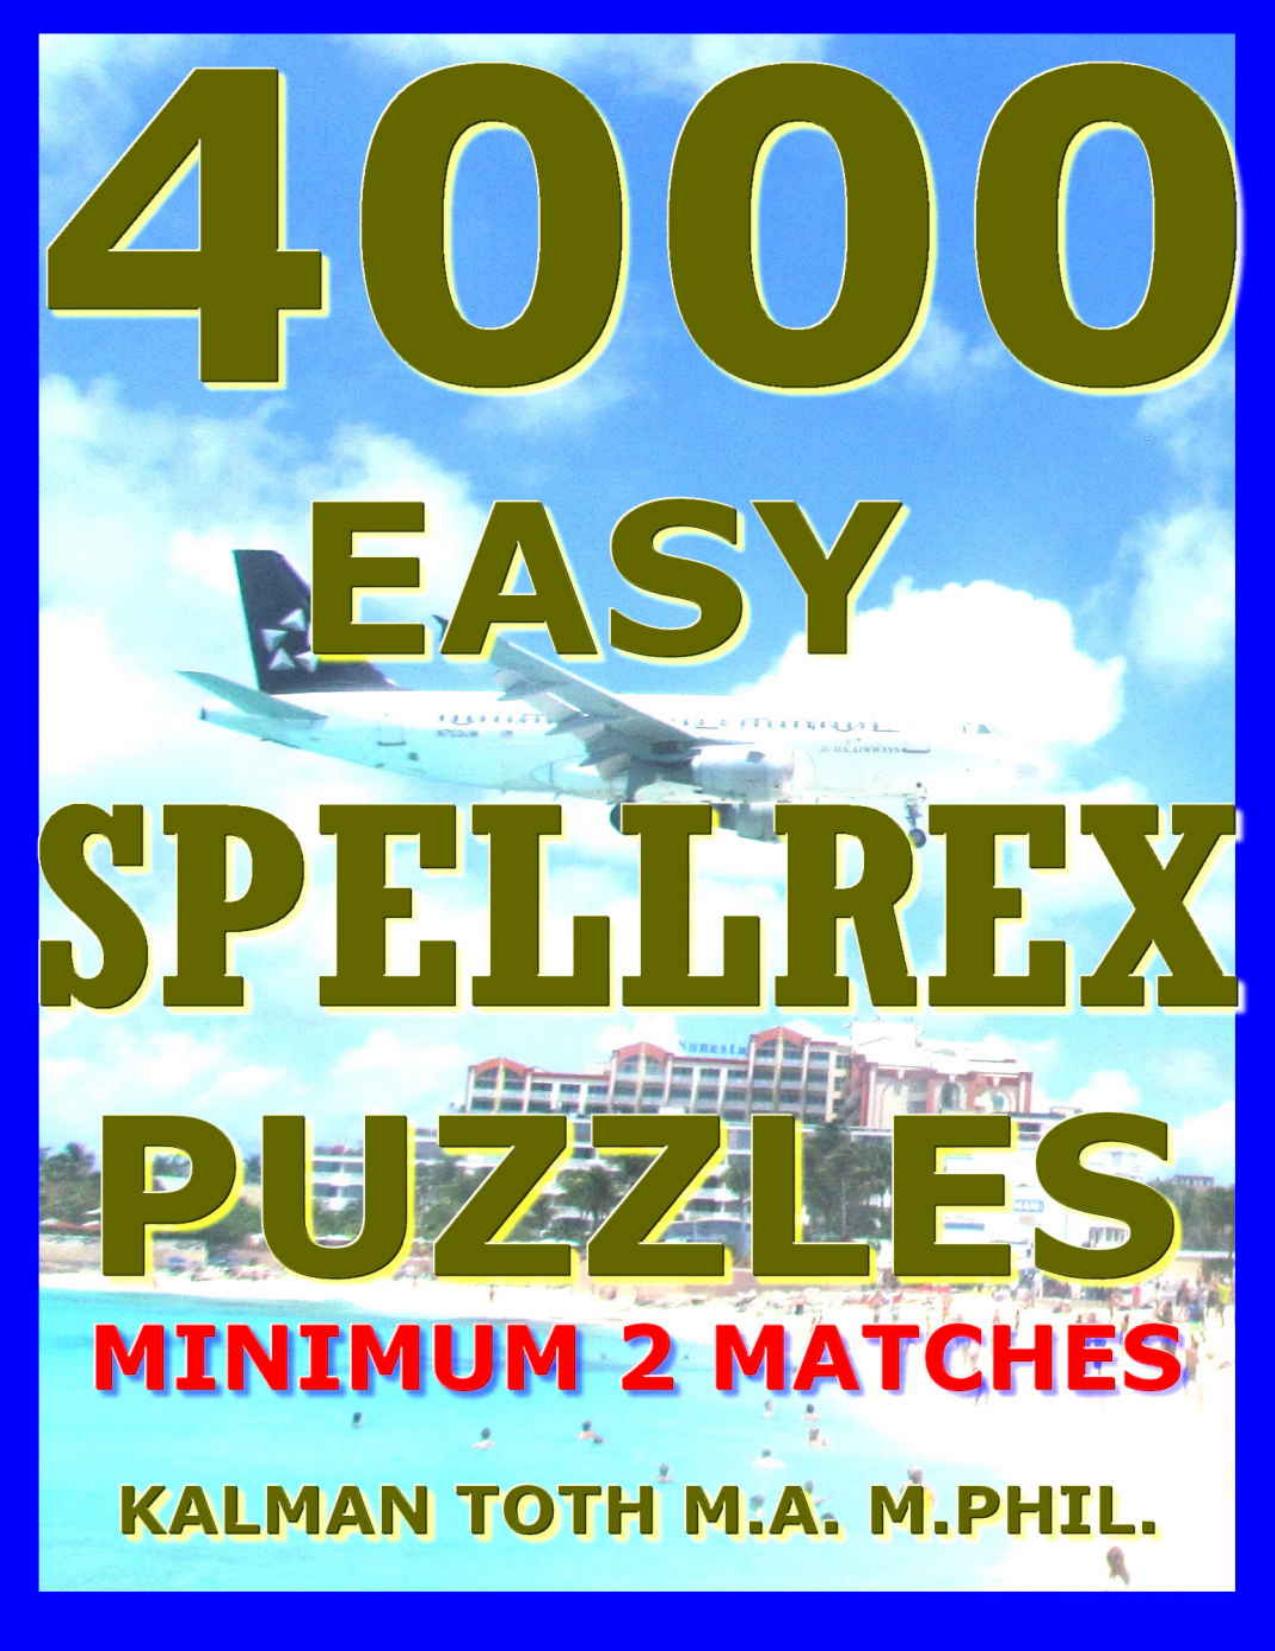 4000 Easy Spellrex Puzzles: Minimum 2 Matches by Kalman Toth M.A. M.PHIL